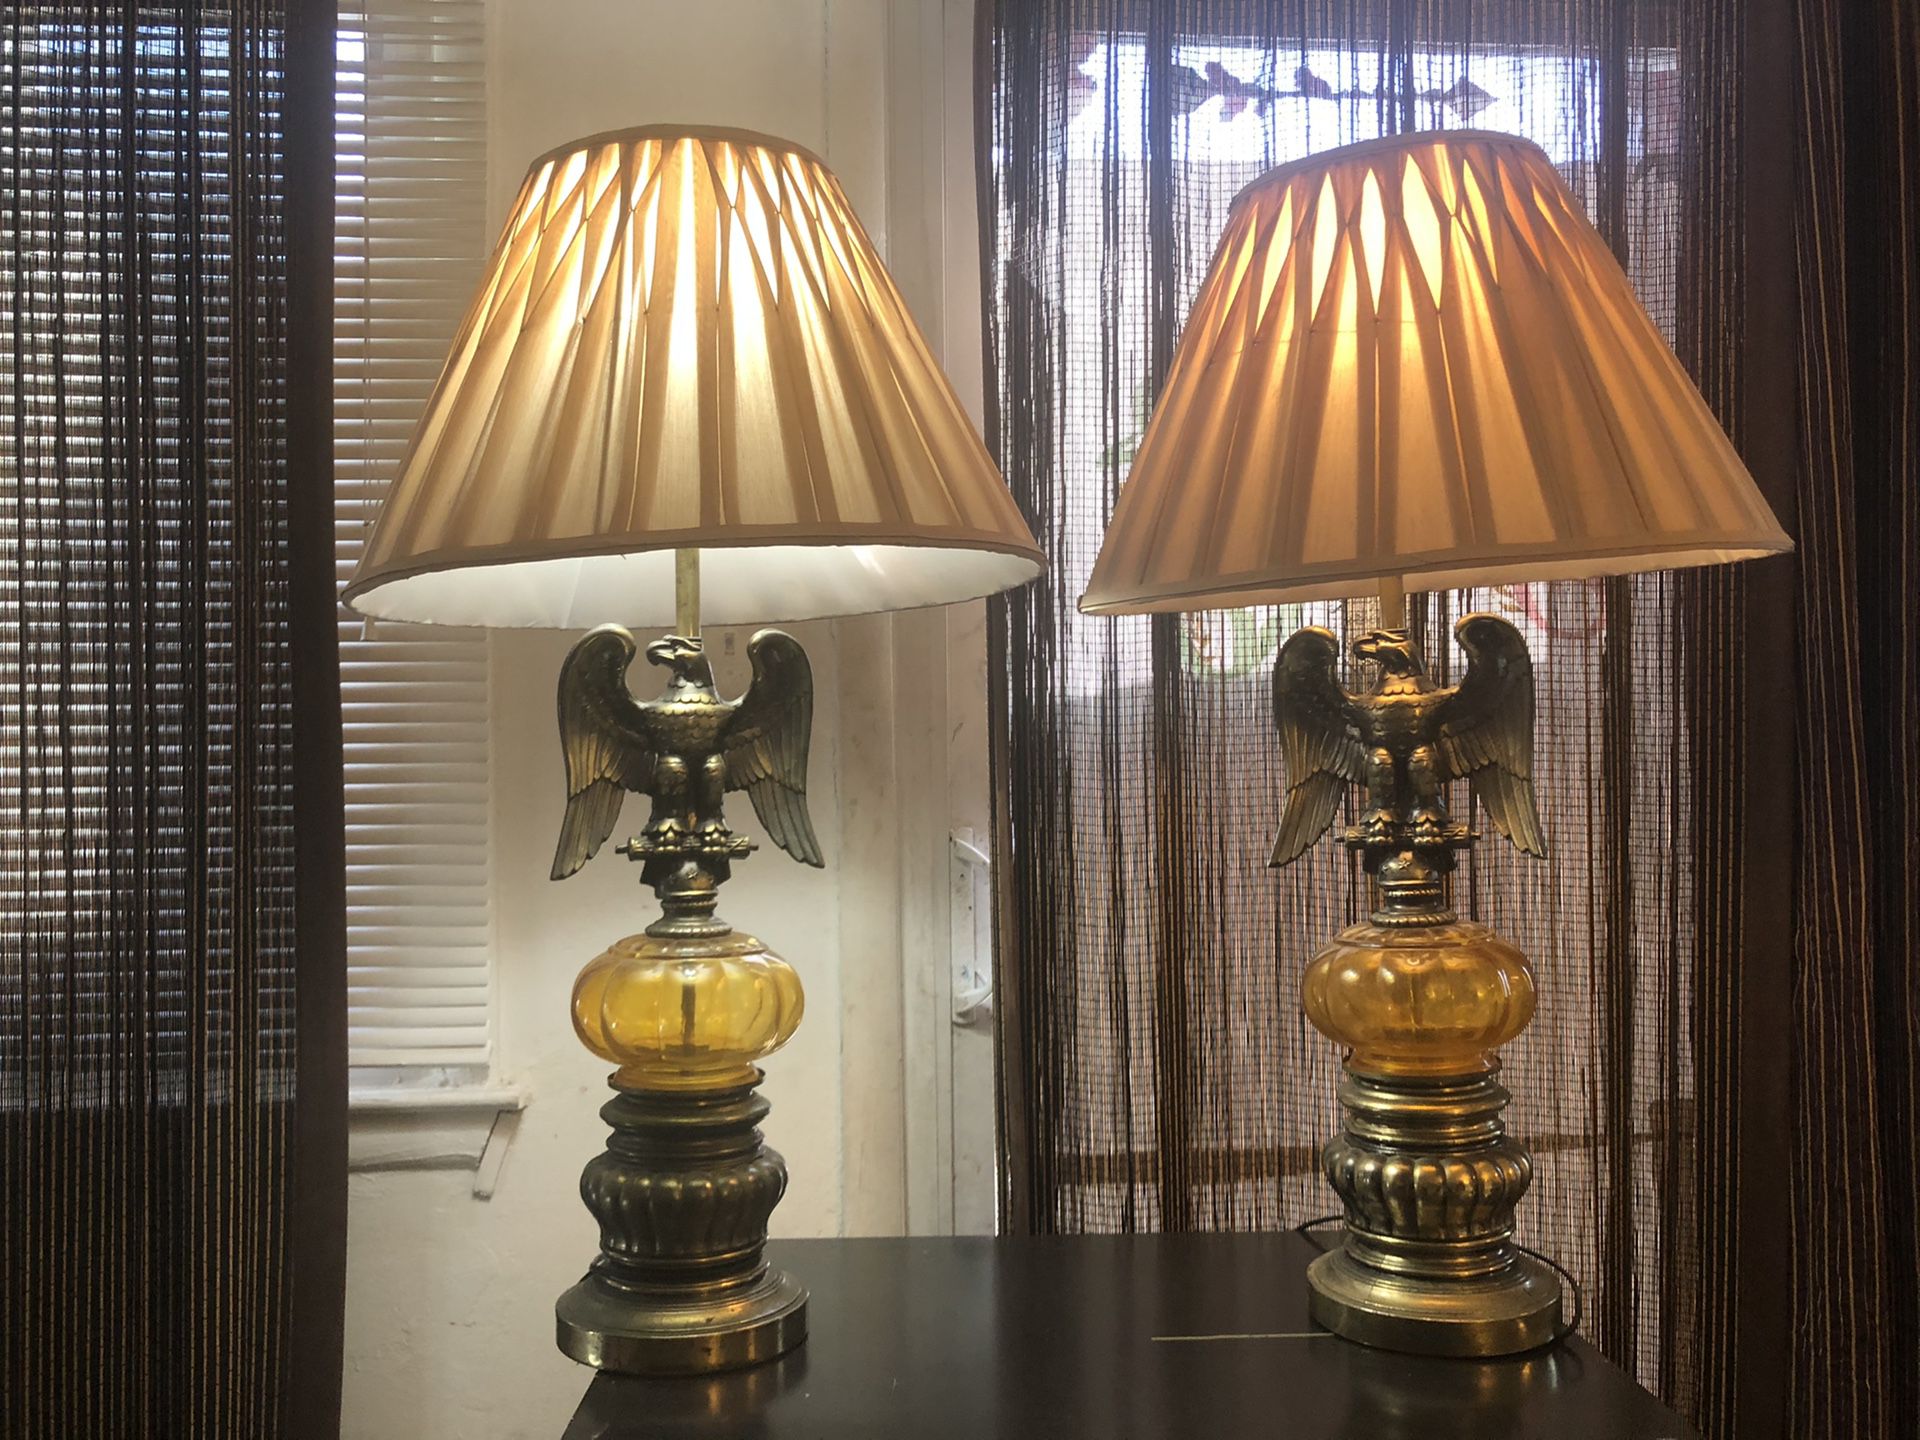 2 vintage American eagle lamps